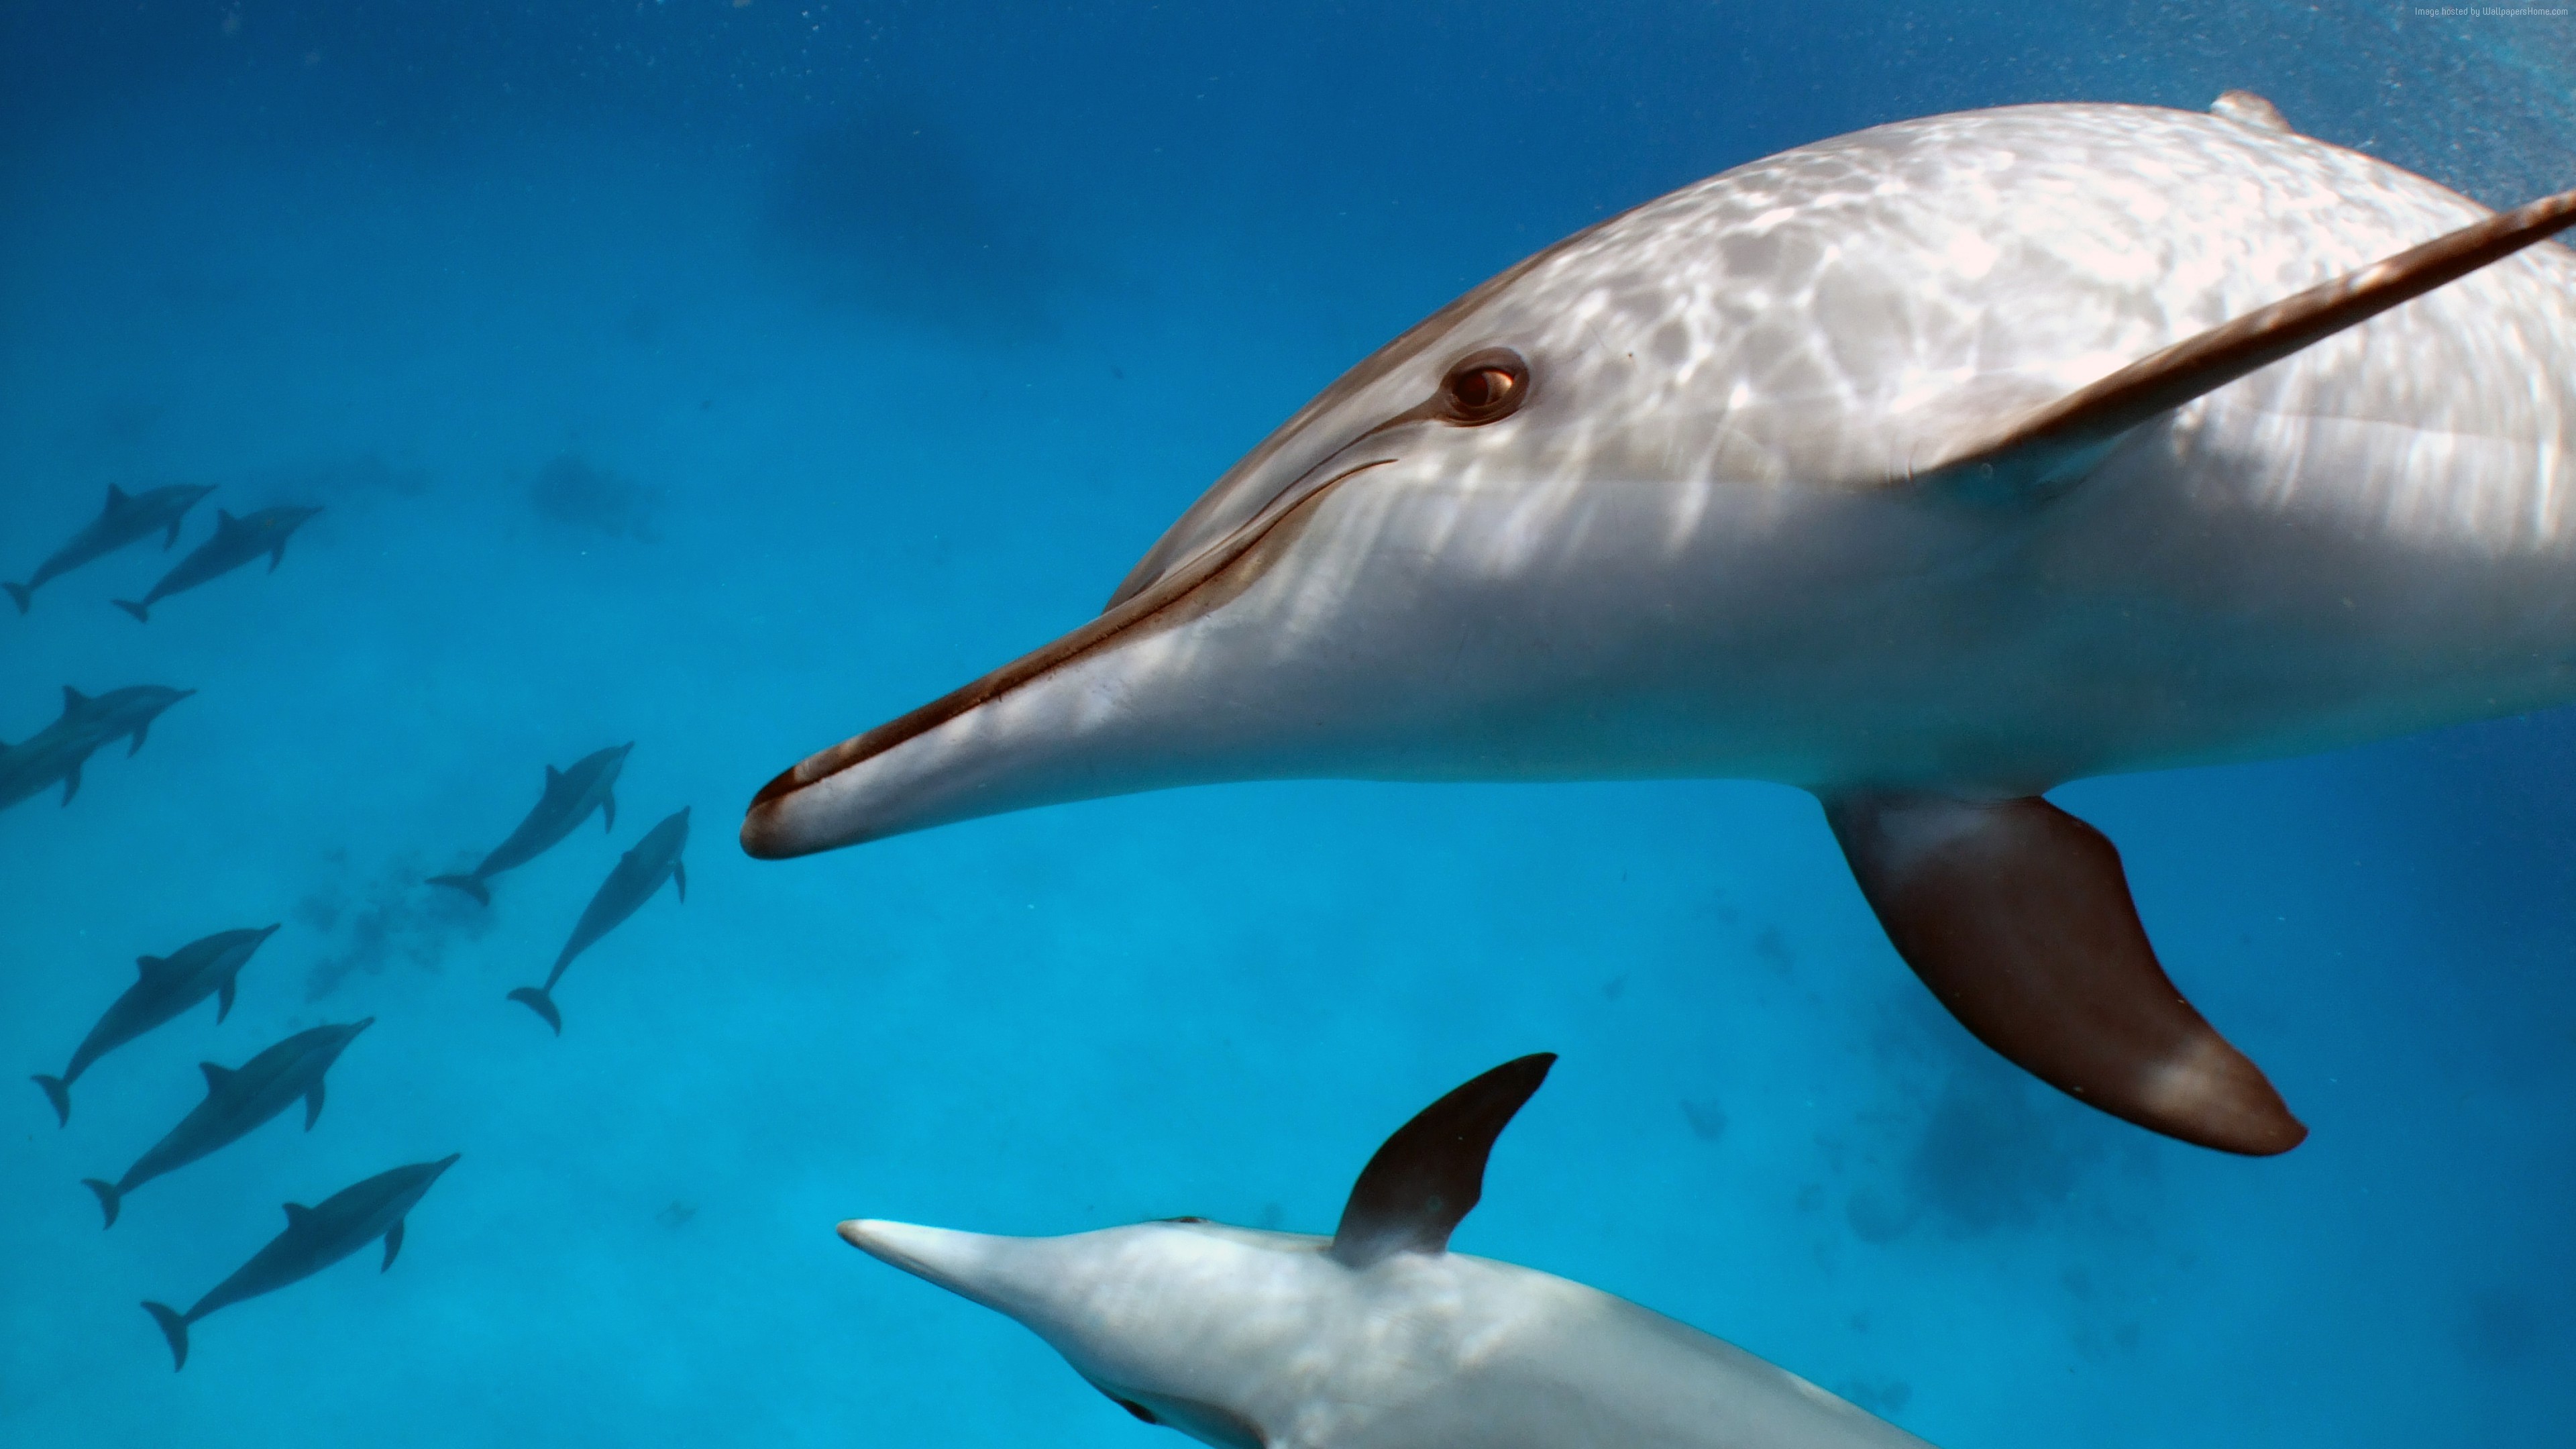 General 3840x2160 water animals mammals dolphin underwater blue wildlife aqua nature closeup